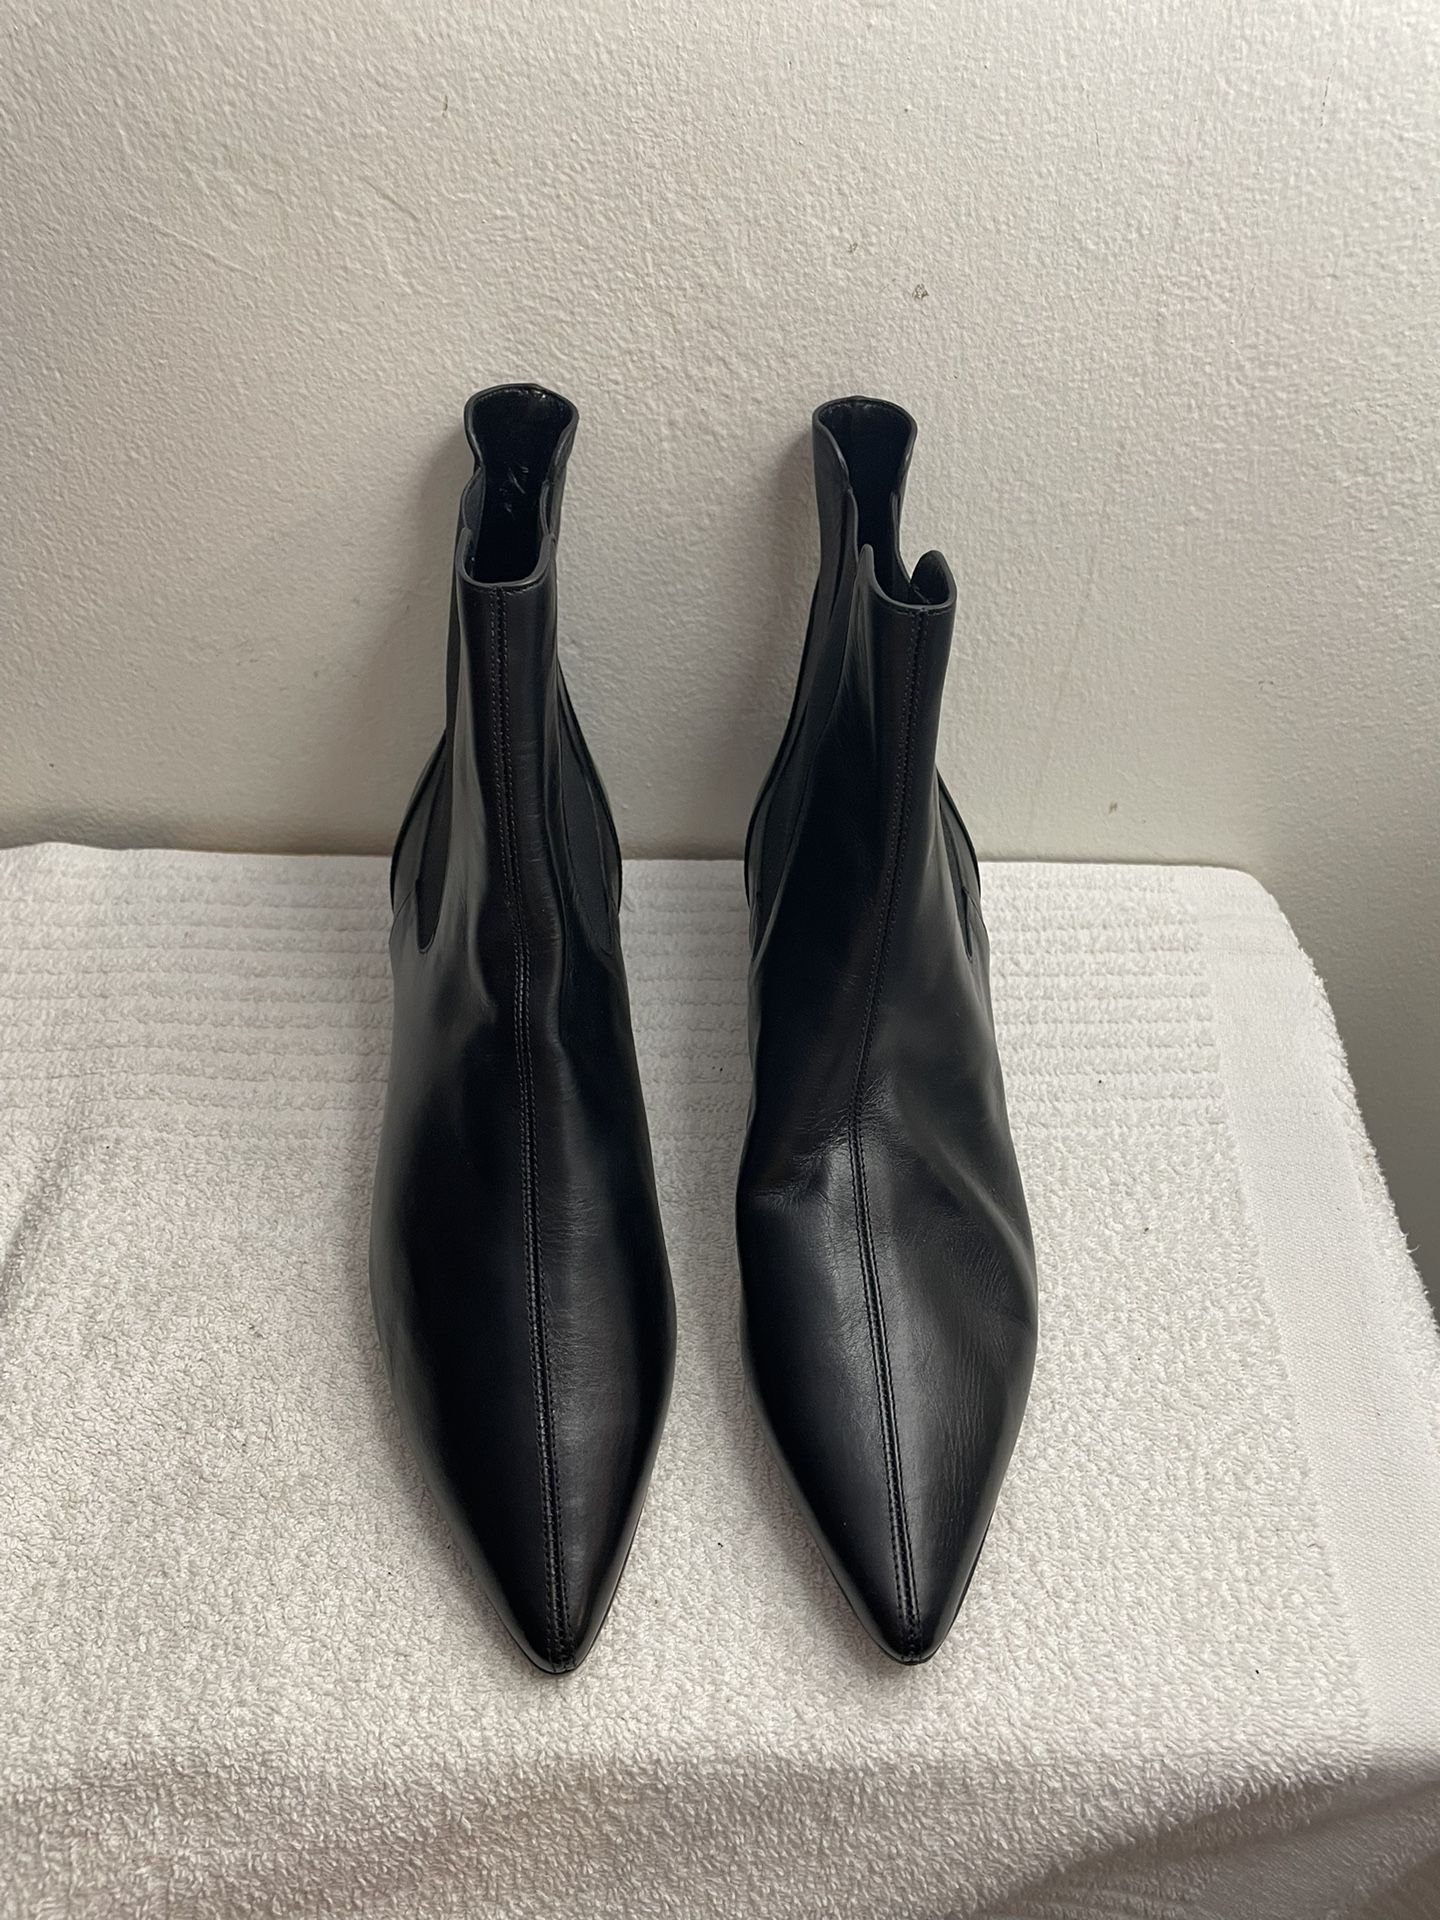 Givenchy Paris Black Leather Booties Sz 38